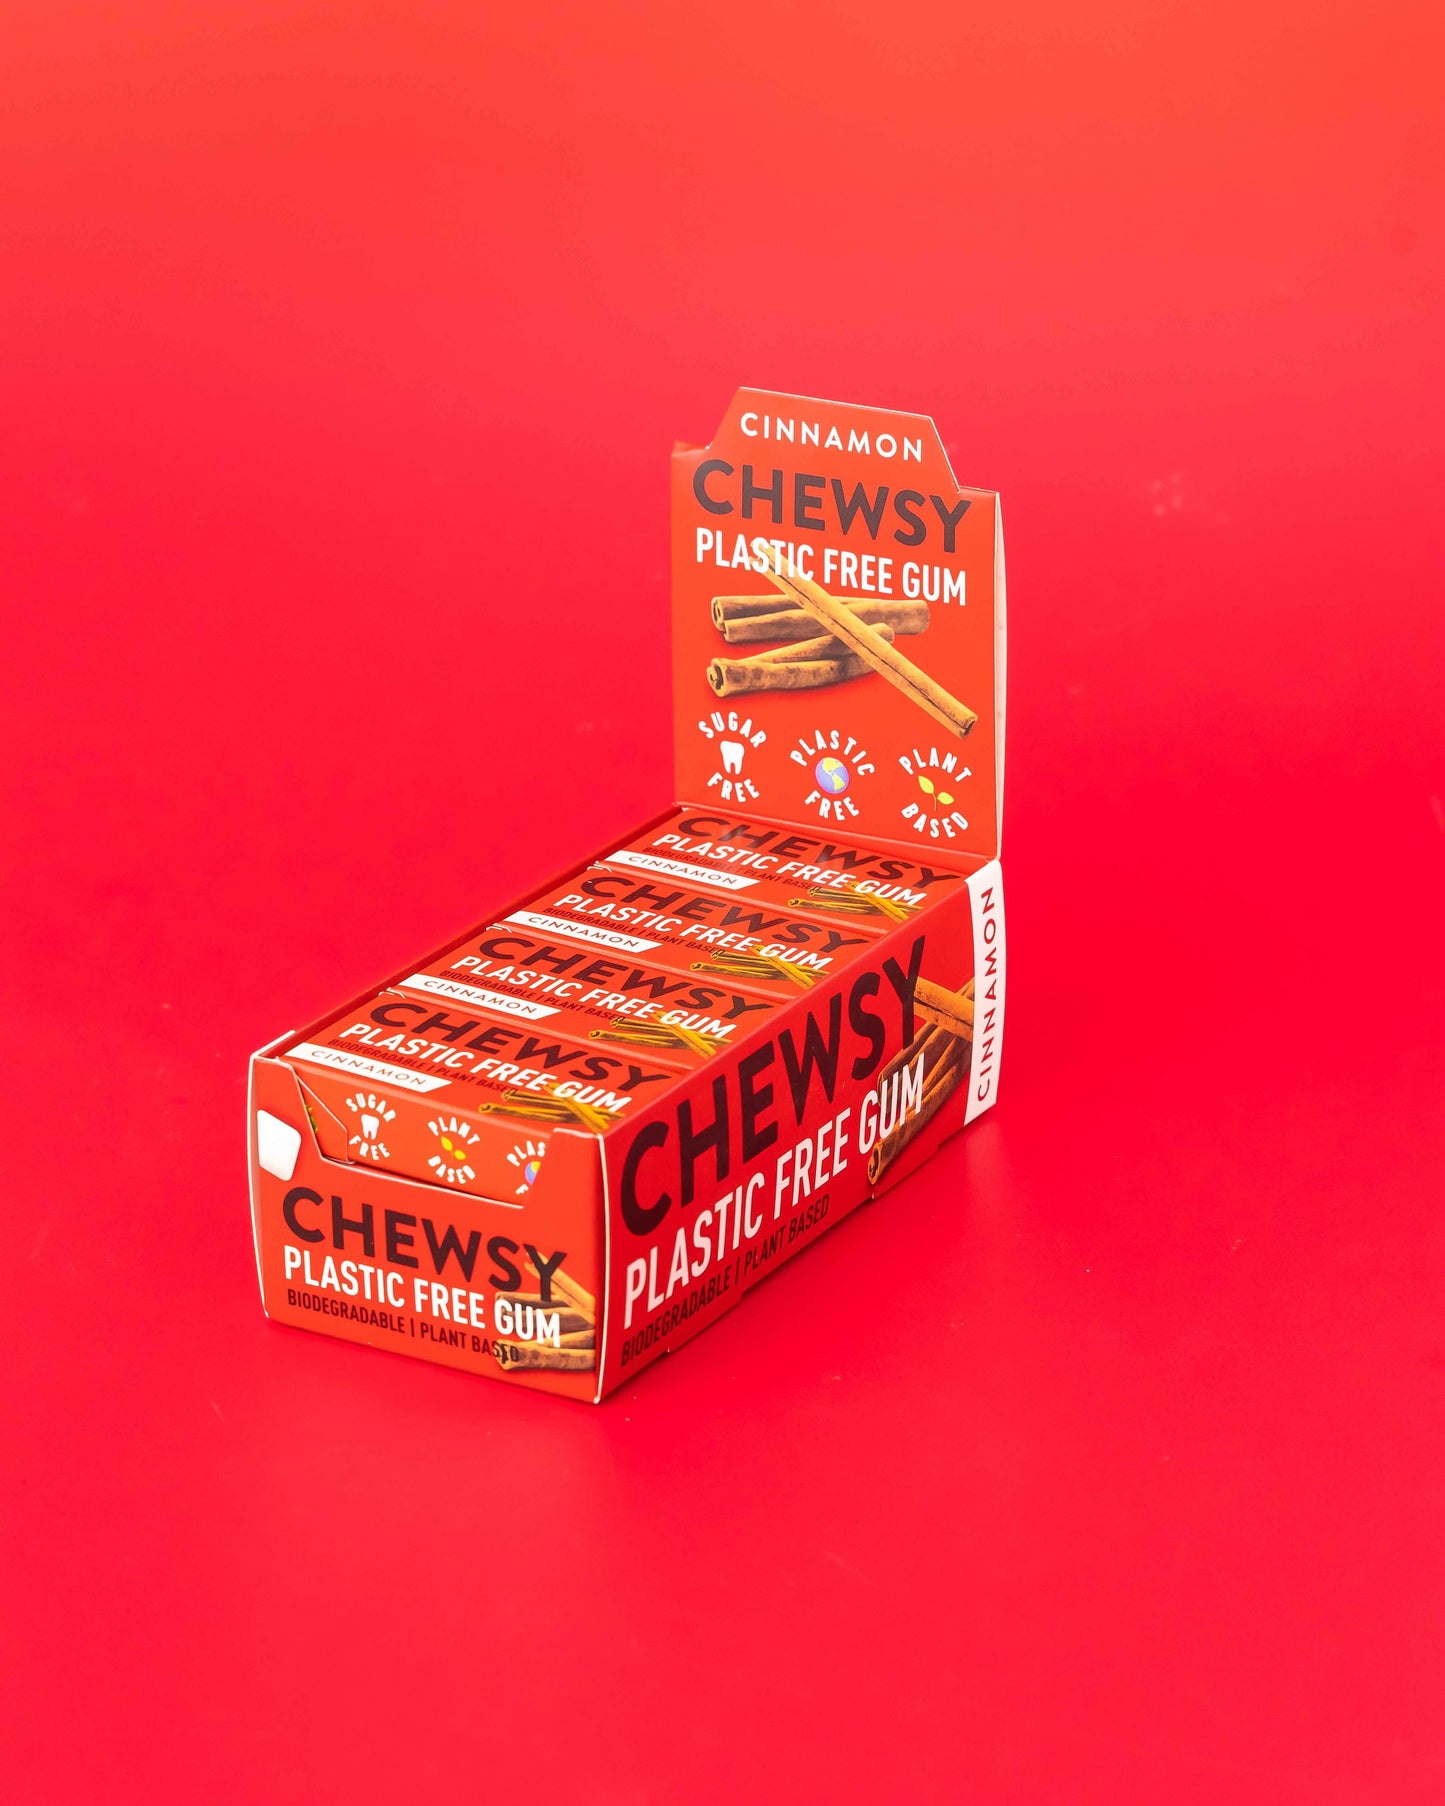 Chewsy Cinnamon Gum